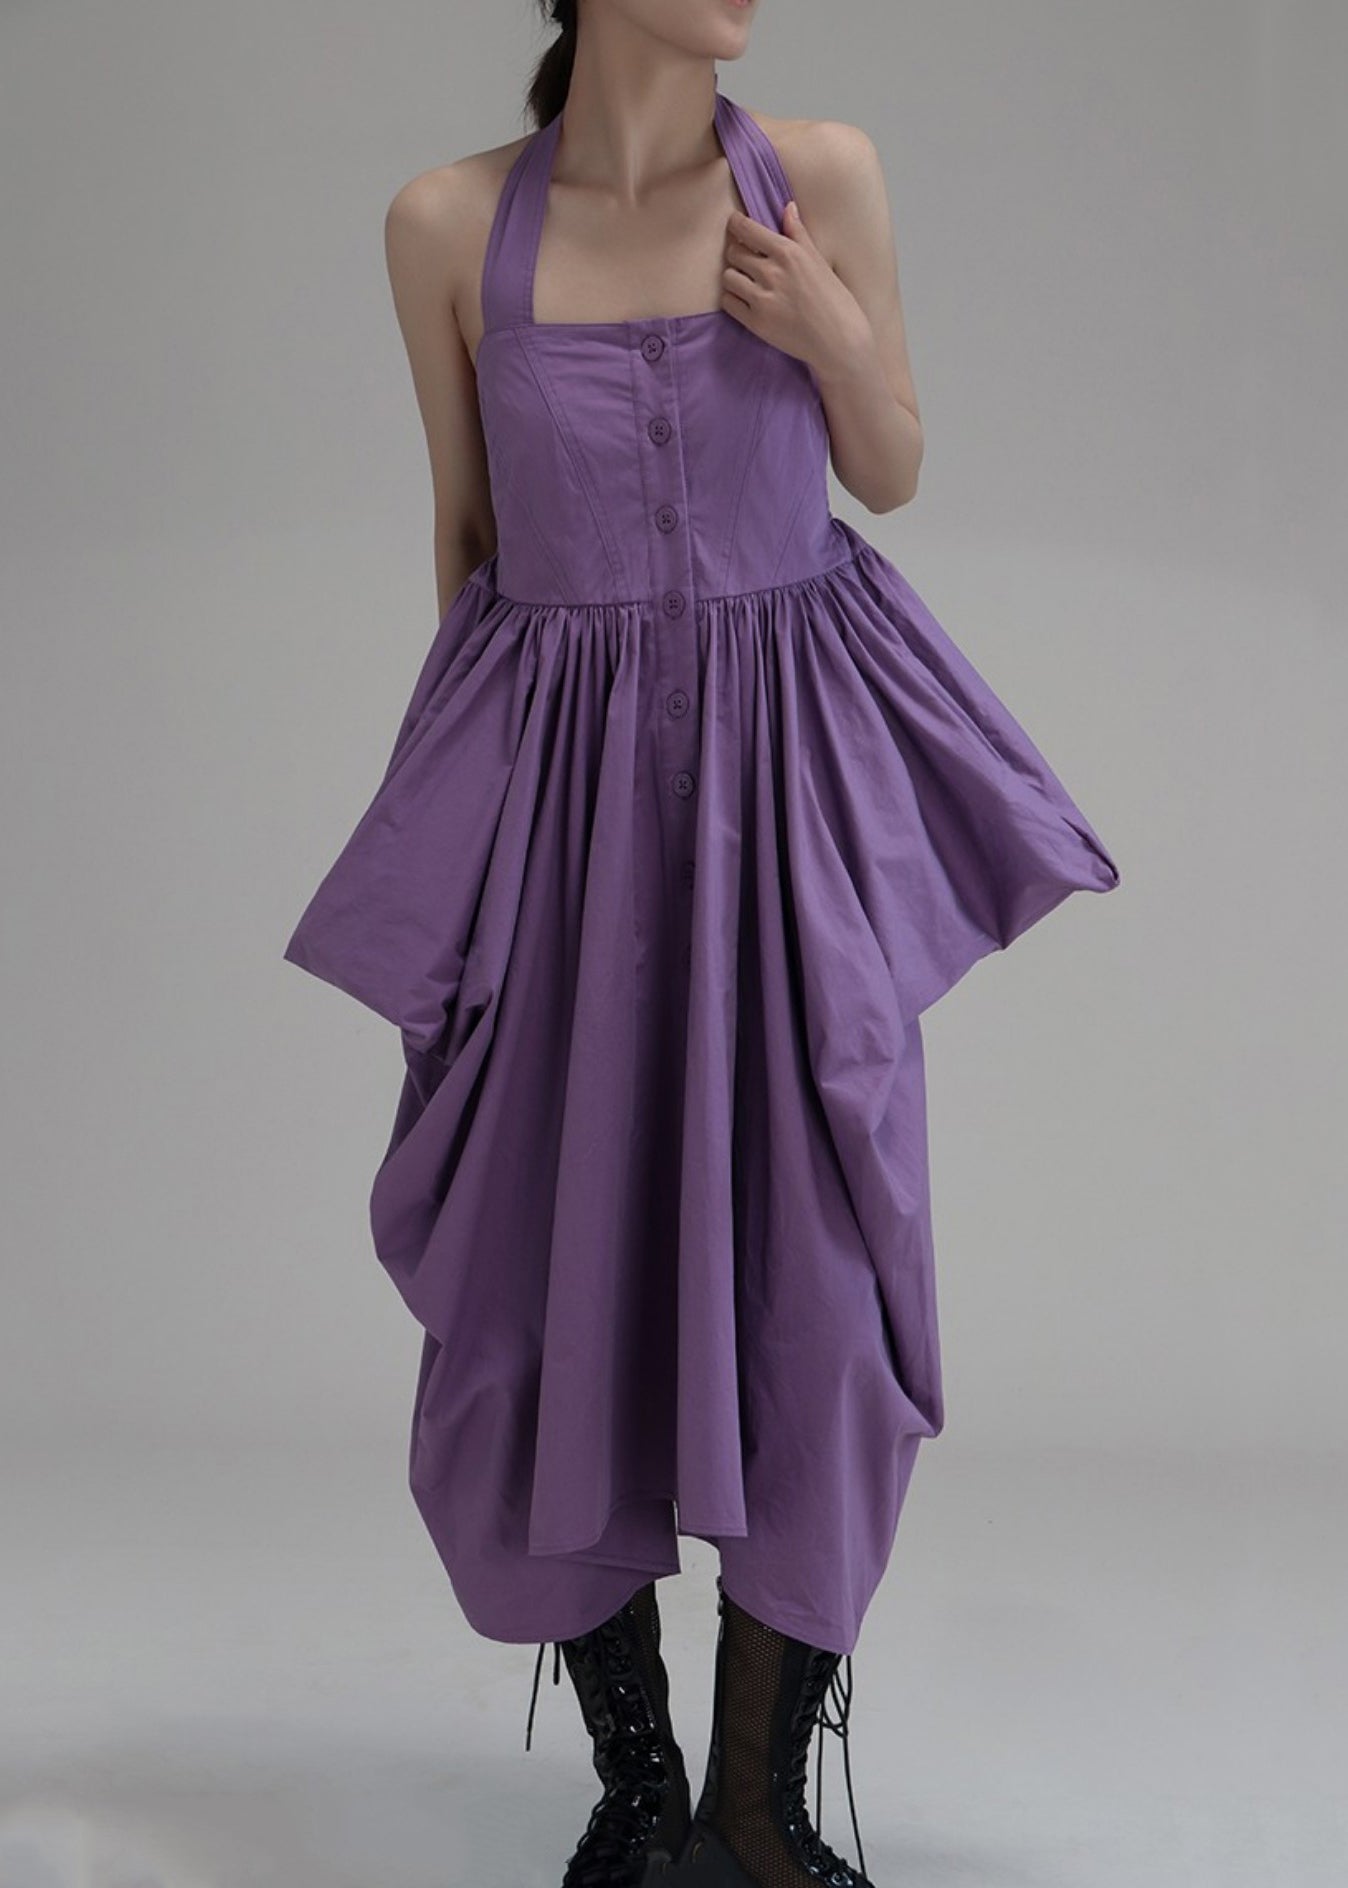 New Purple Asymmetrical Wrinkled Button Cotton Long Dress Sleeveless Ada Fashion